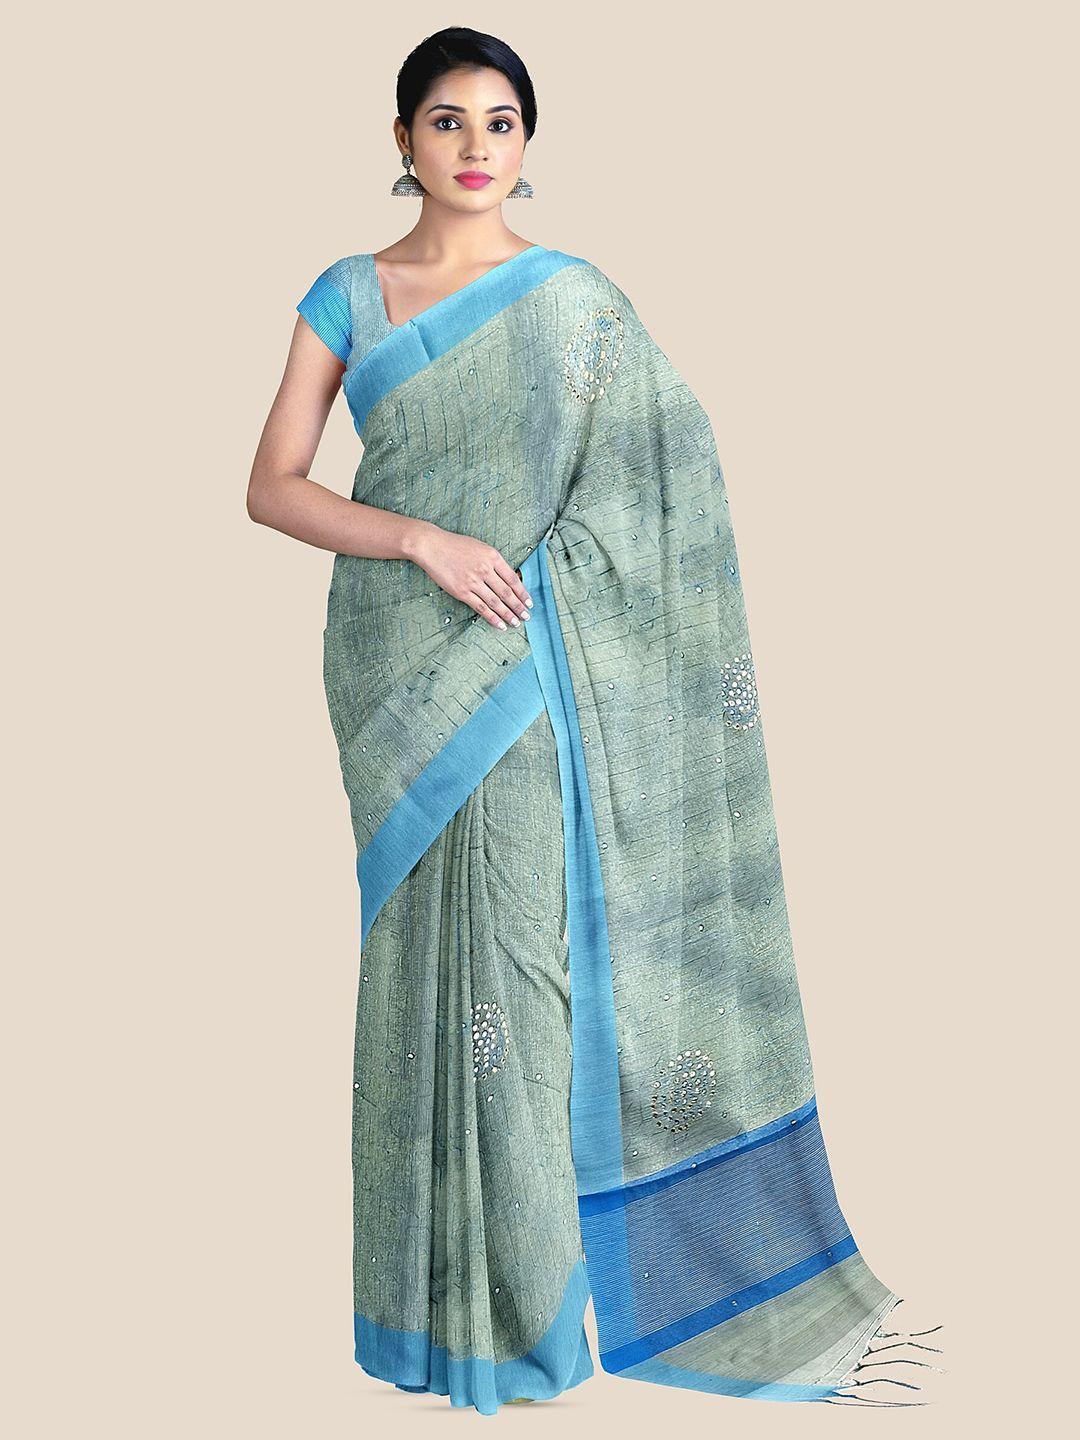 the chennai silks embellished embroidered tissue banarasi saree